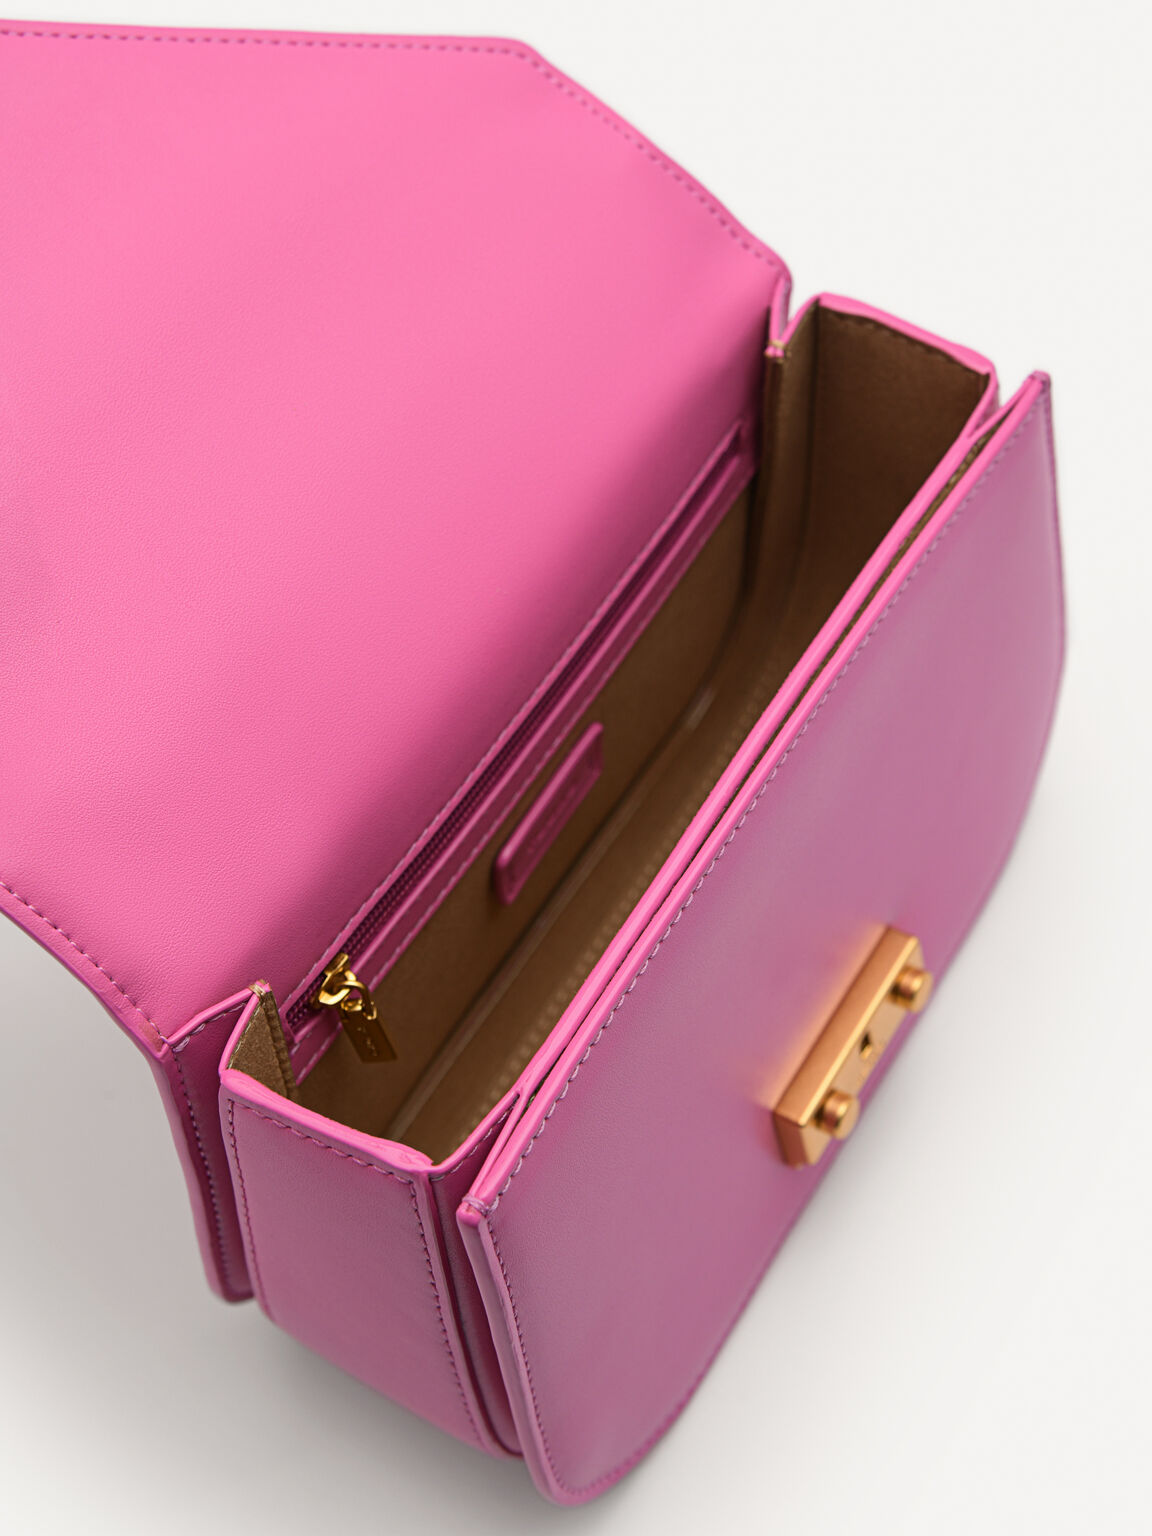 PEDRO Studio Abbey Leather Handbag, Pink